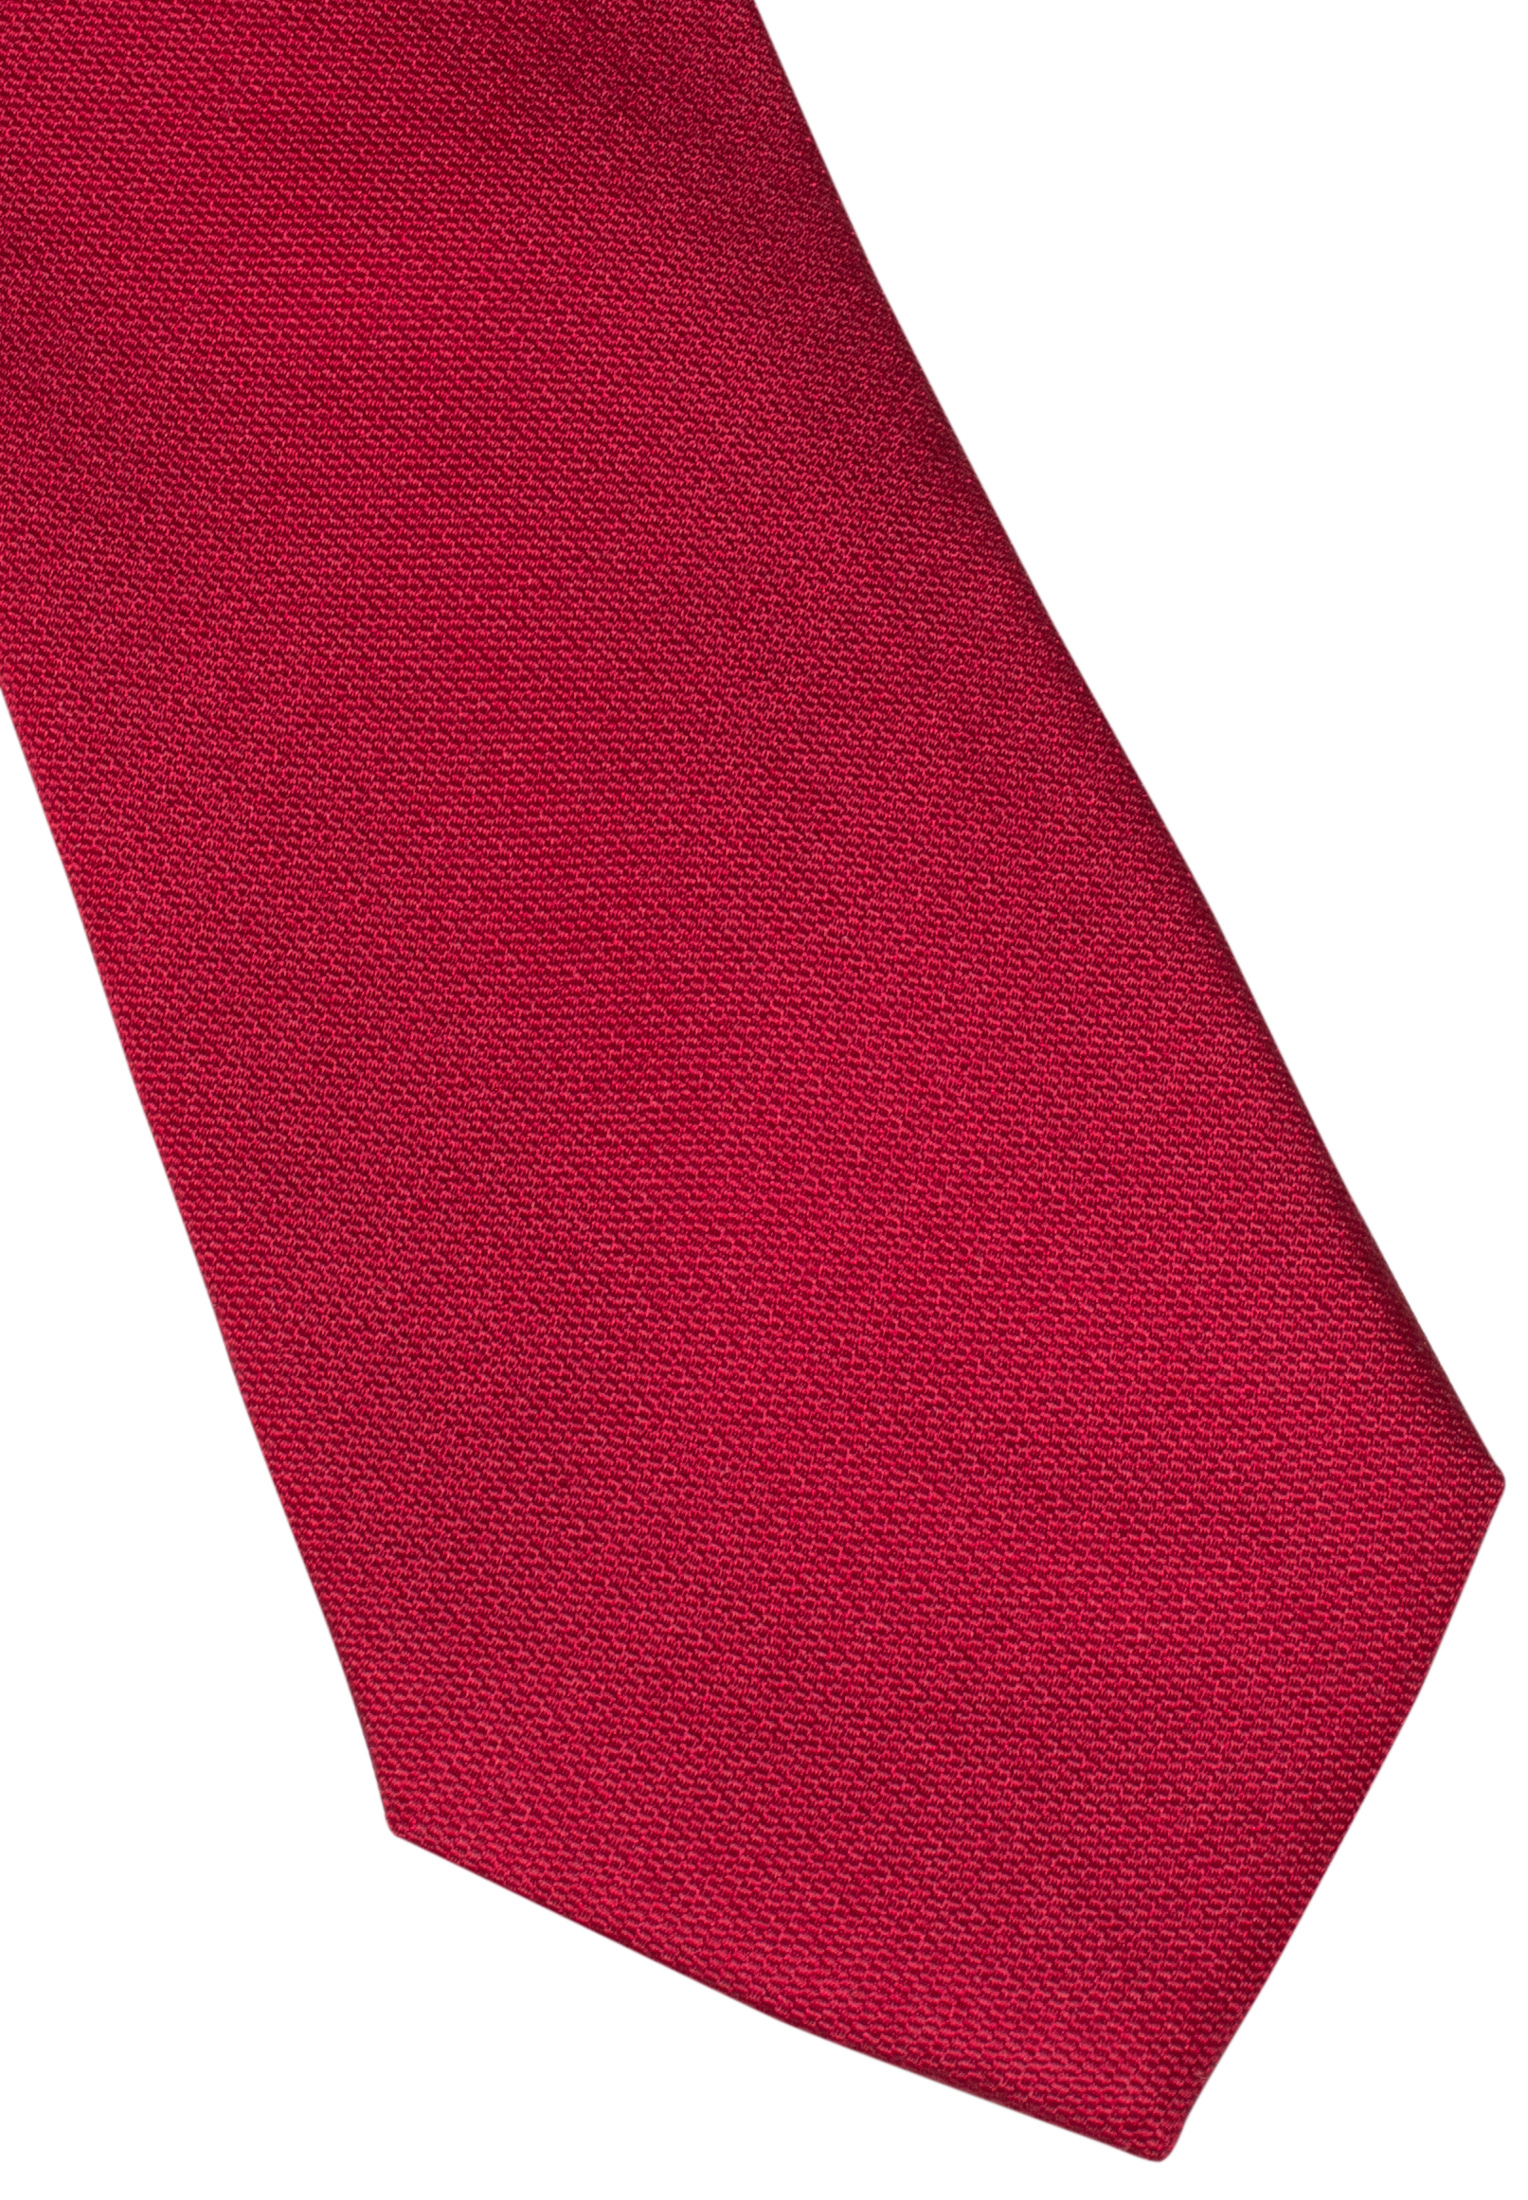 Krawatte in rot | 1AC00020-05-01-142 142 unifarben rot | 